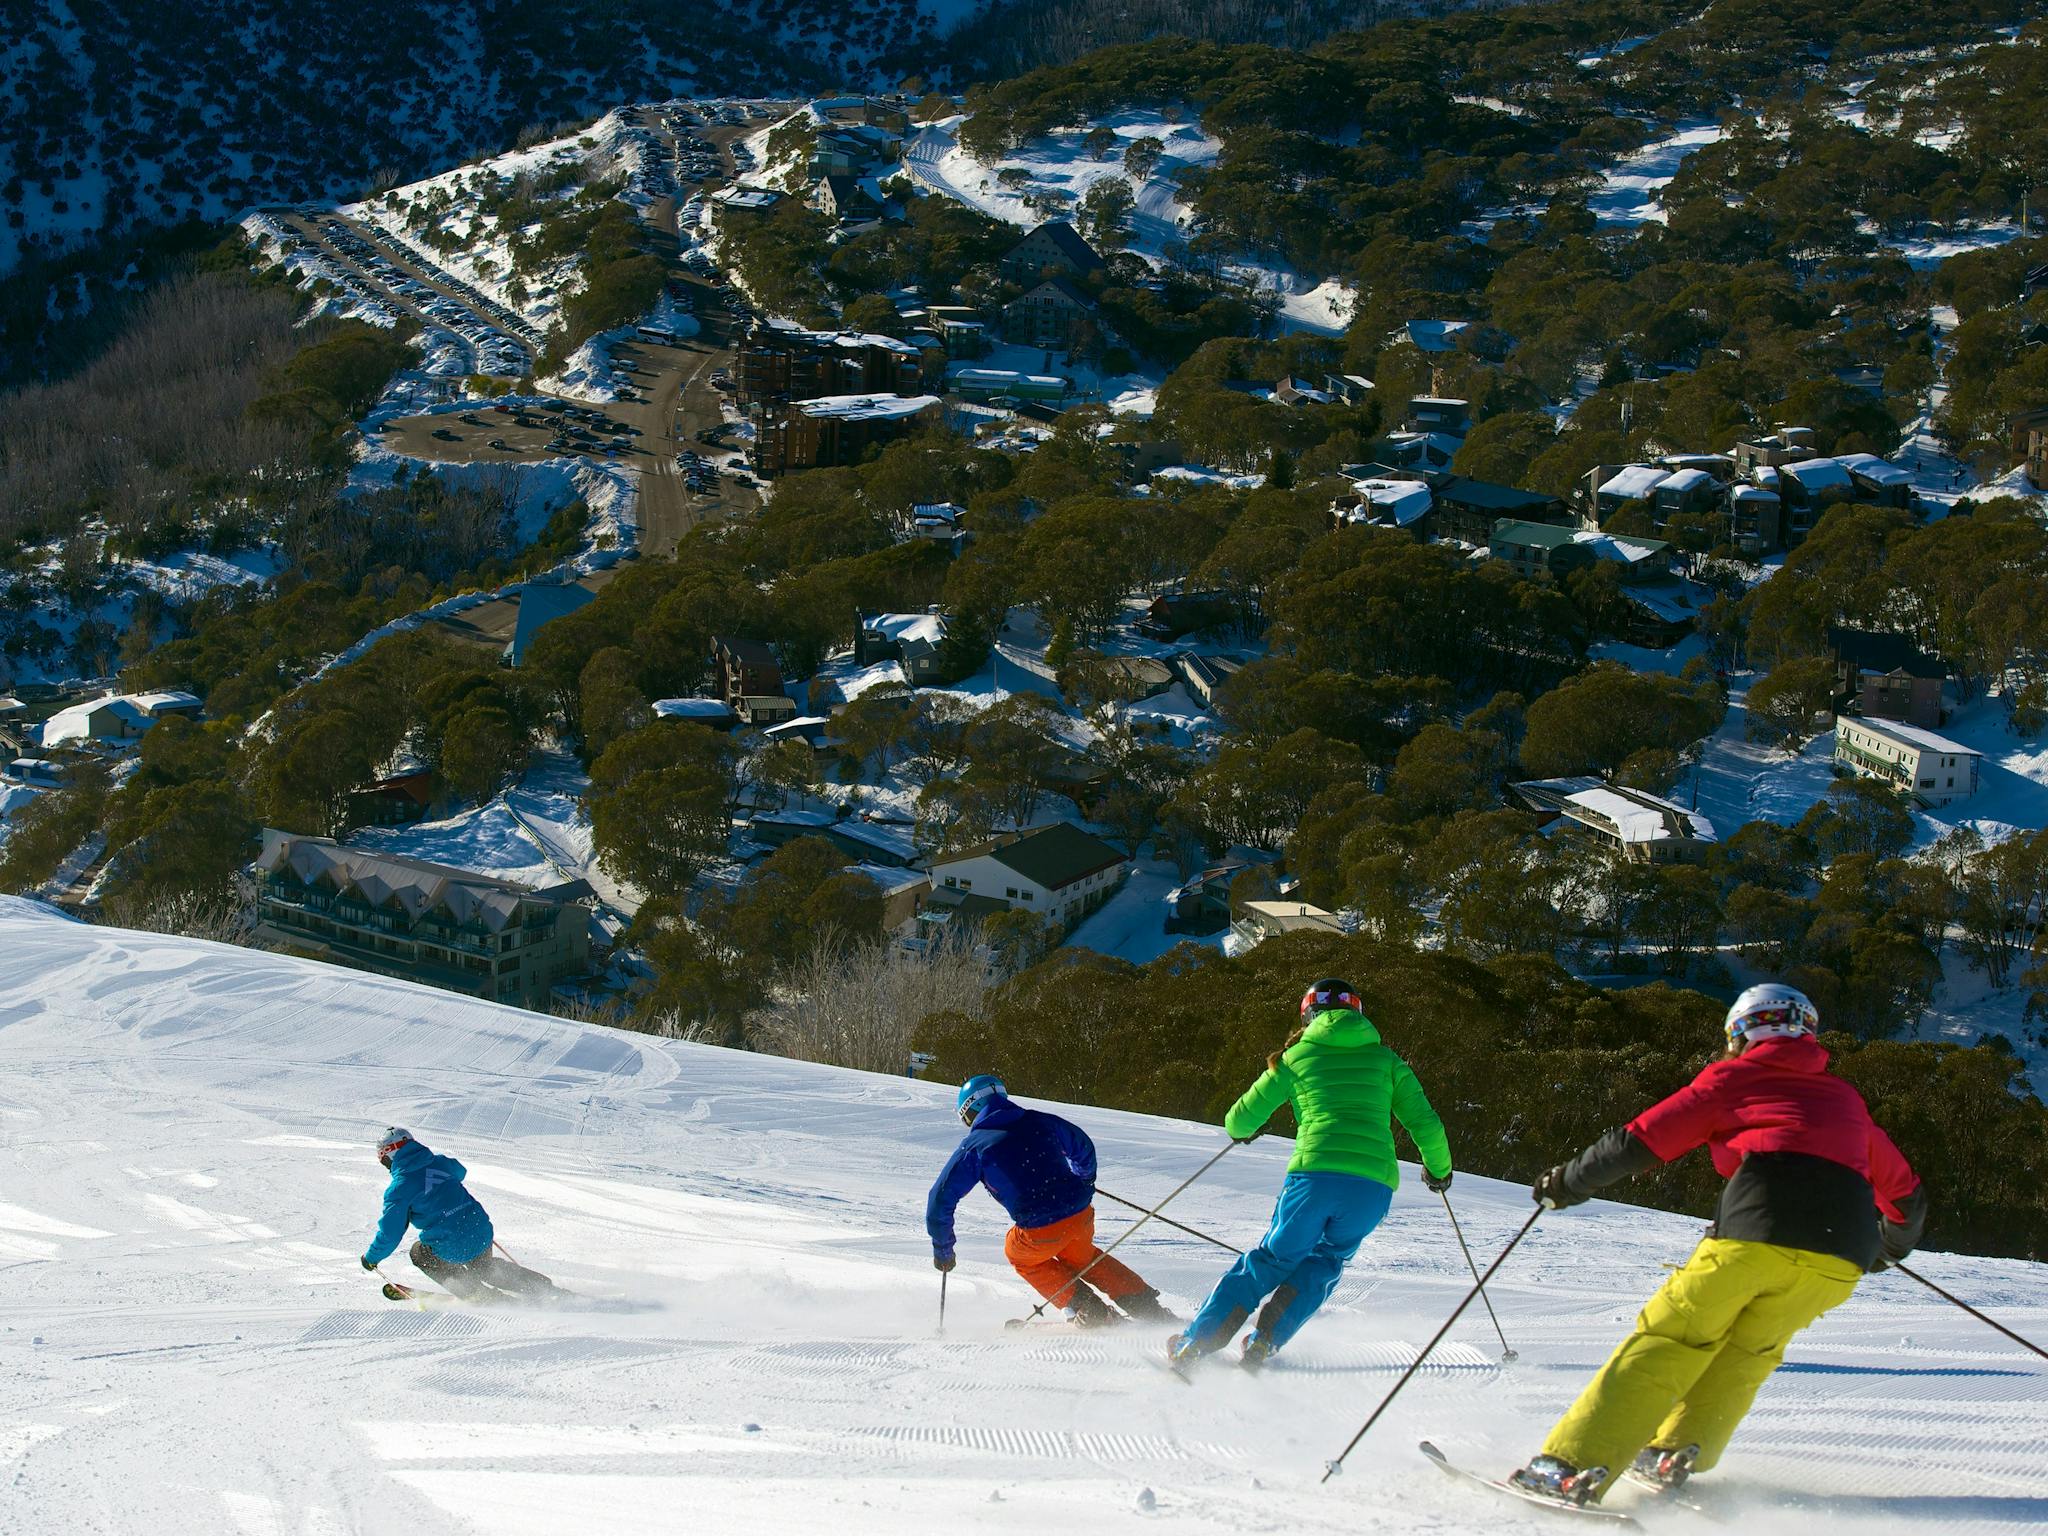 Ski lesson above the village